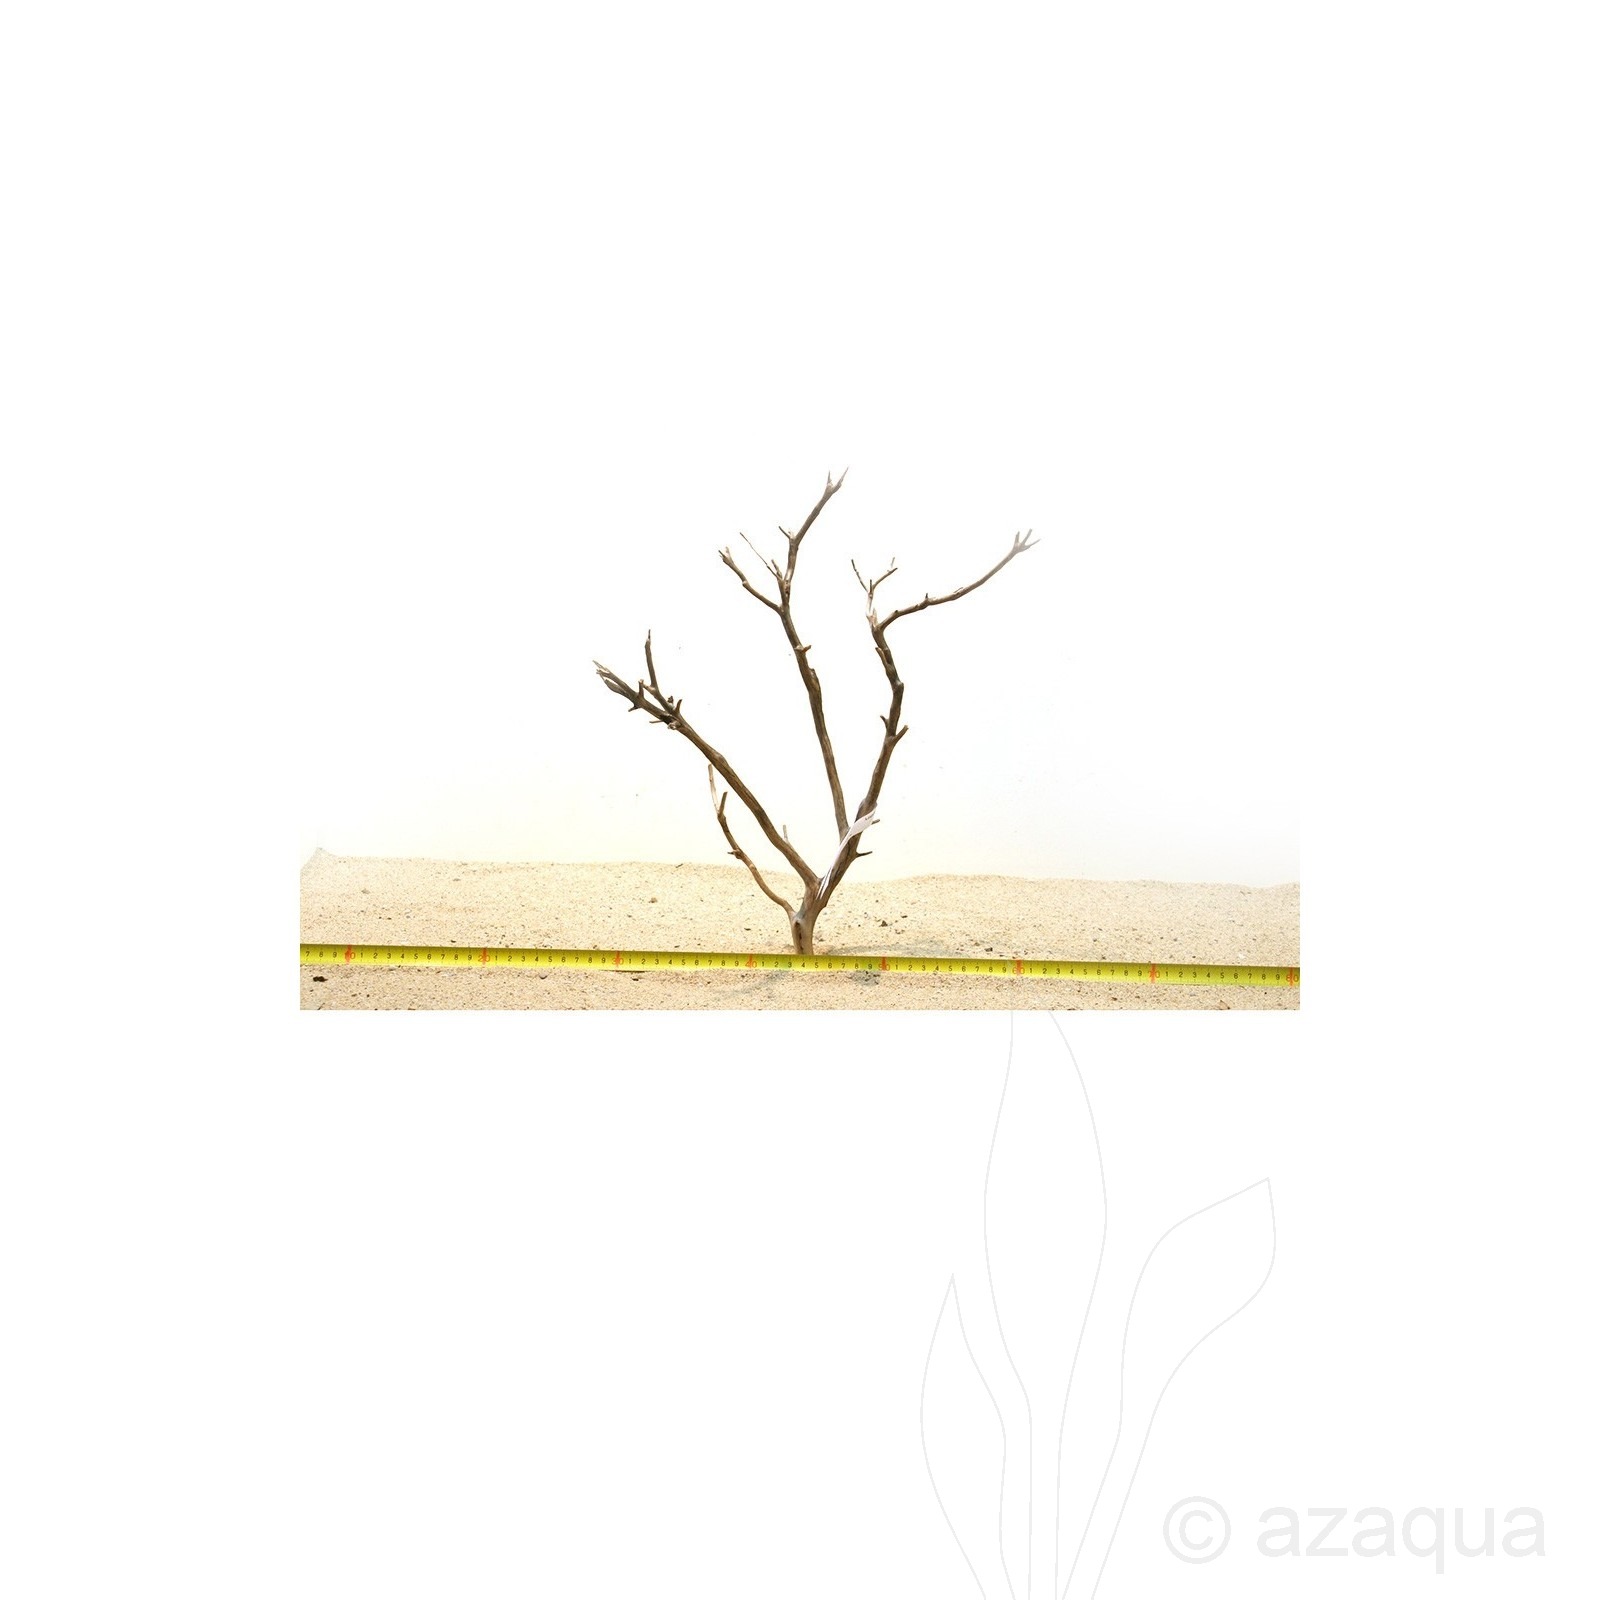 Manzanita wood-S (30-40cm) - Manzanita Wood for aquarium